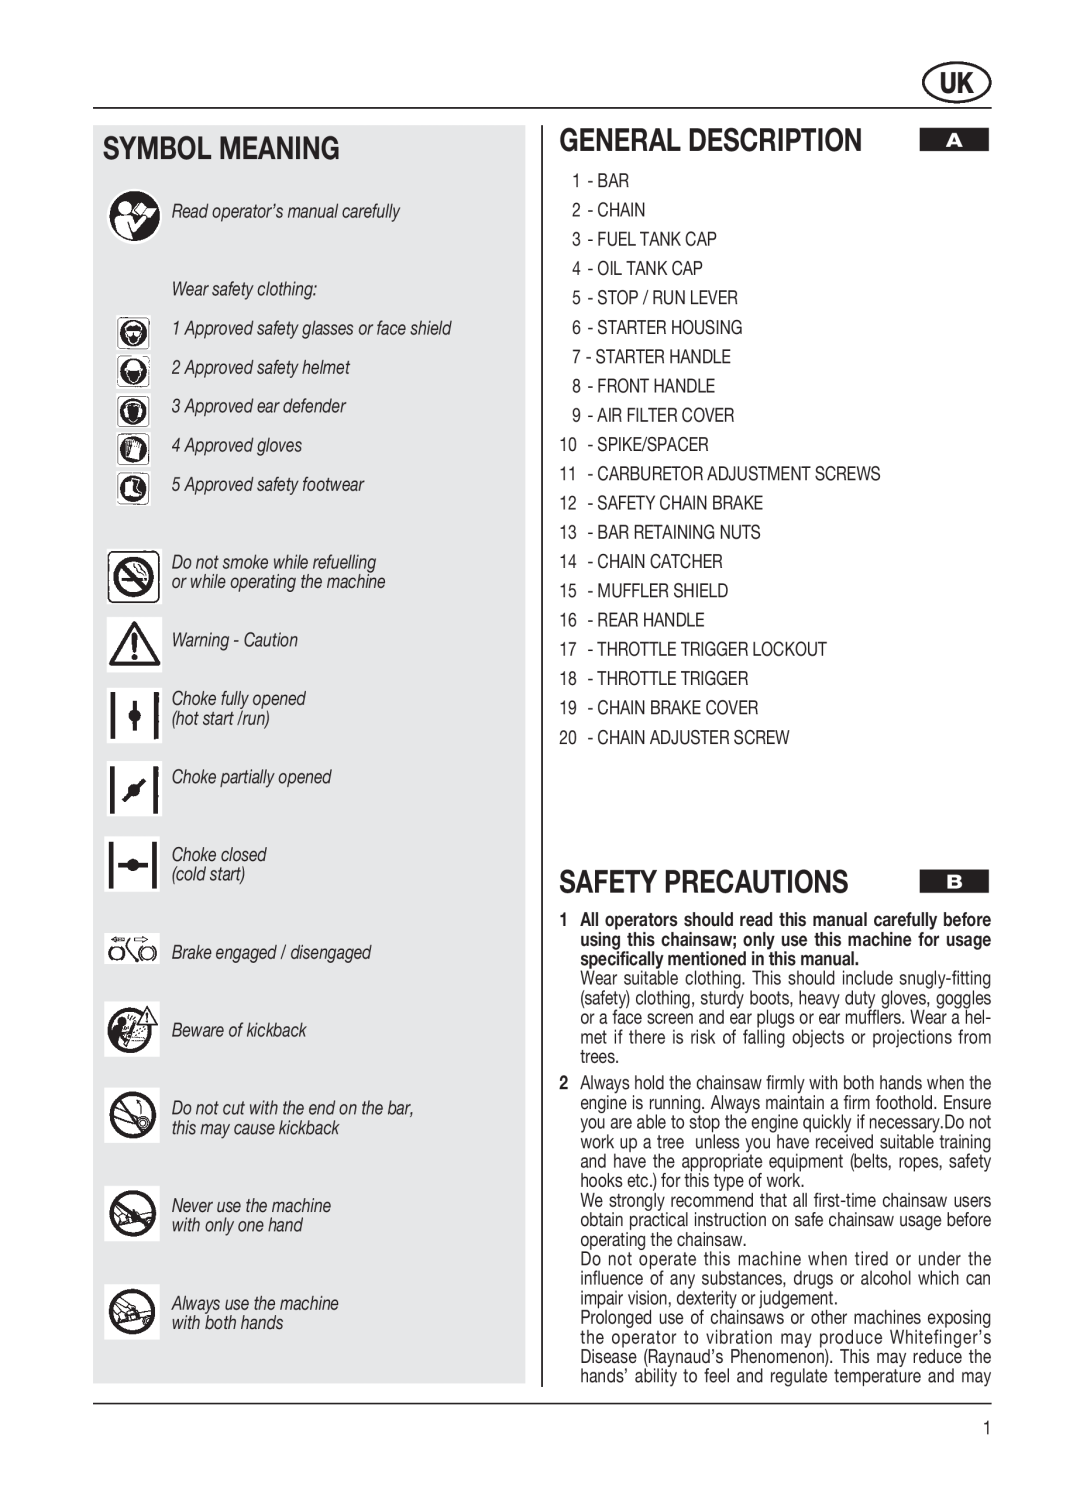 McCulloch PRO MAC 54 54CC, PRO MAC 61 59CC manual Symbol Meaning, General Description, Safety Precautions, Warning - Caution 